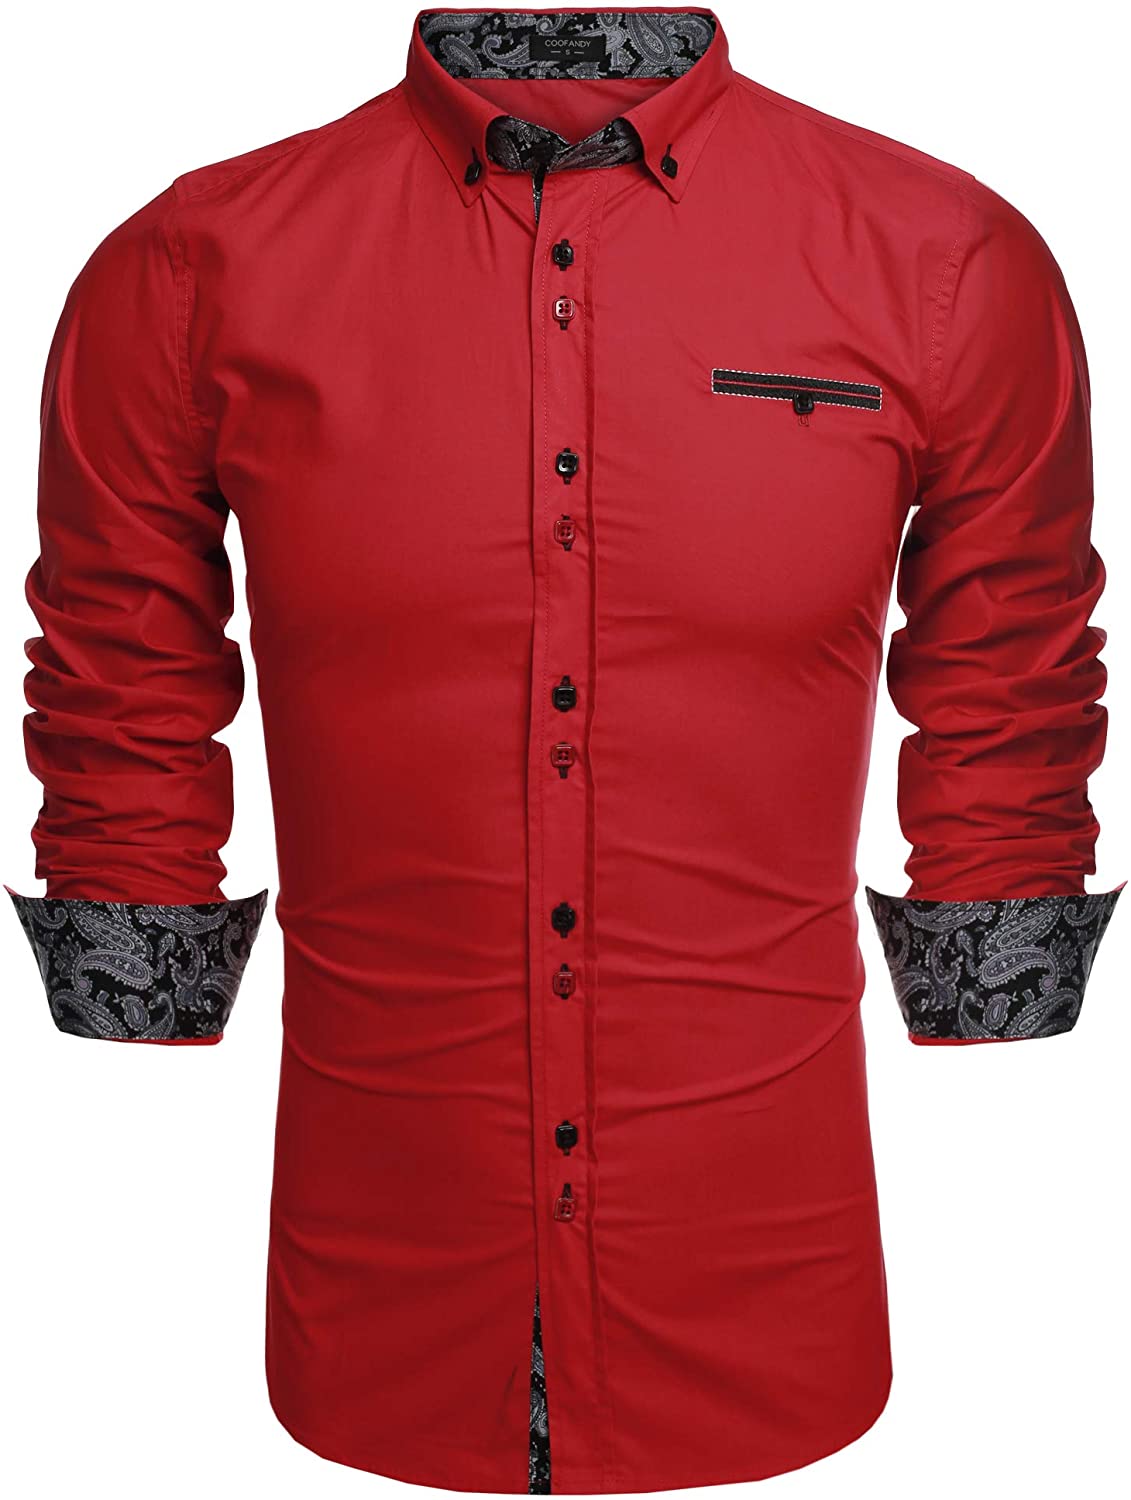 COOFANDY Men’s Paisley Business Dress Shirt Long Sleeve Casual Button Down Shirt 